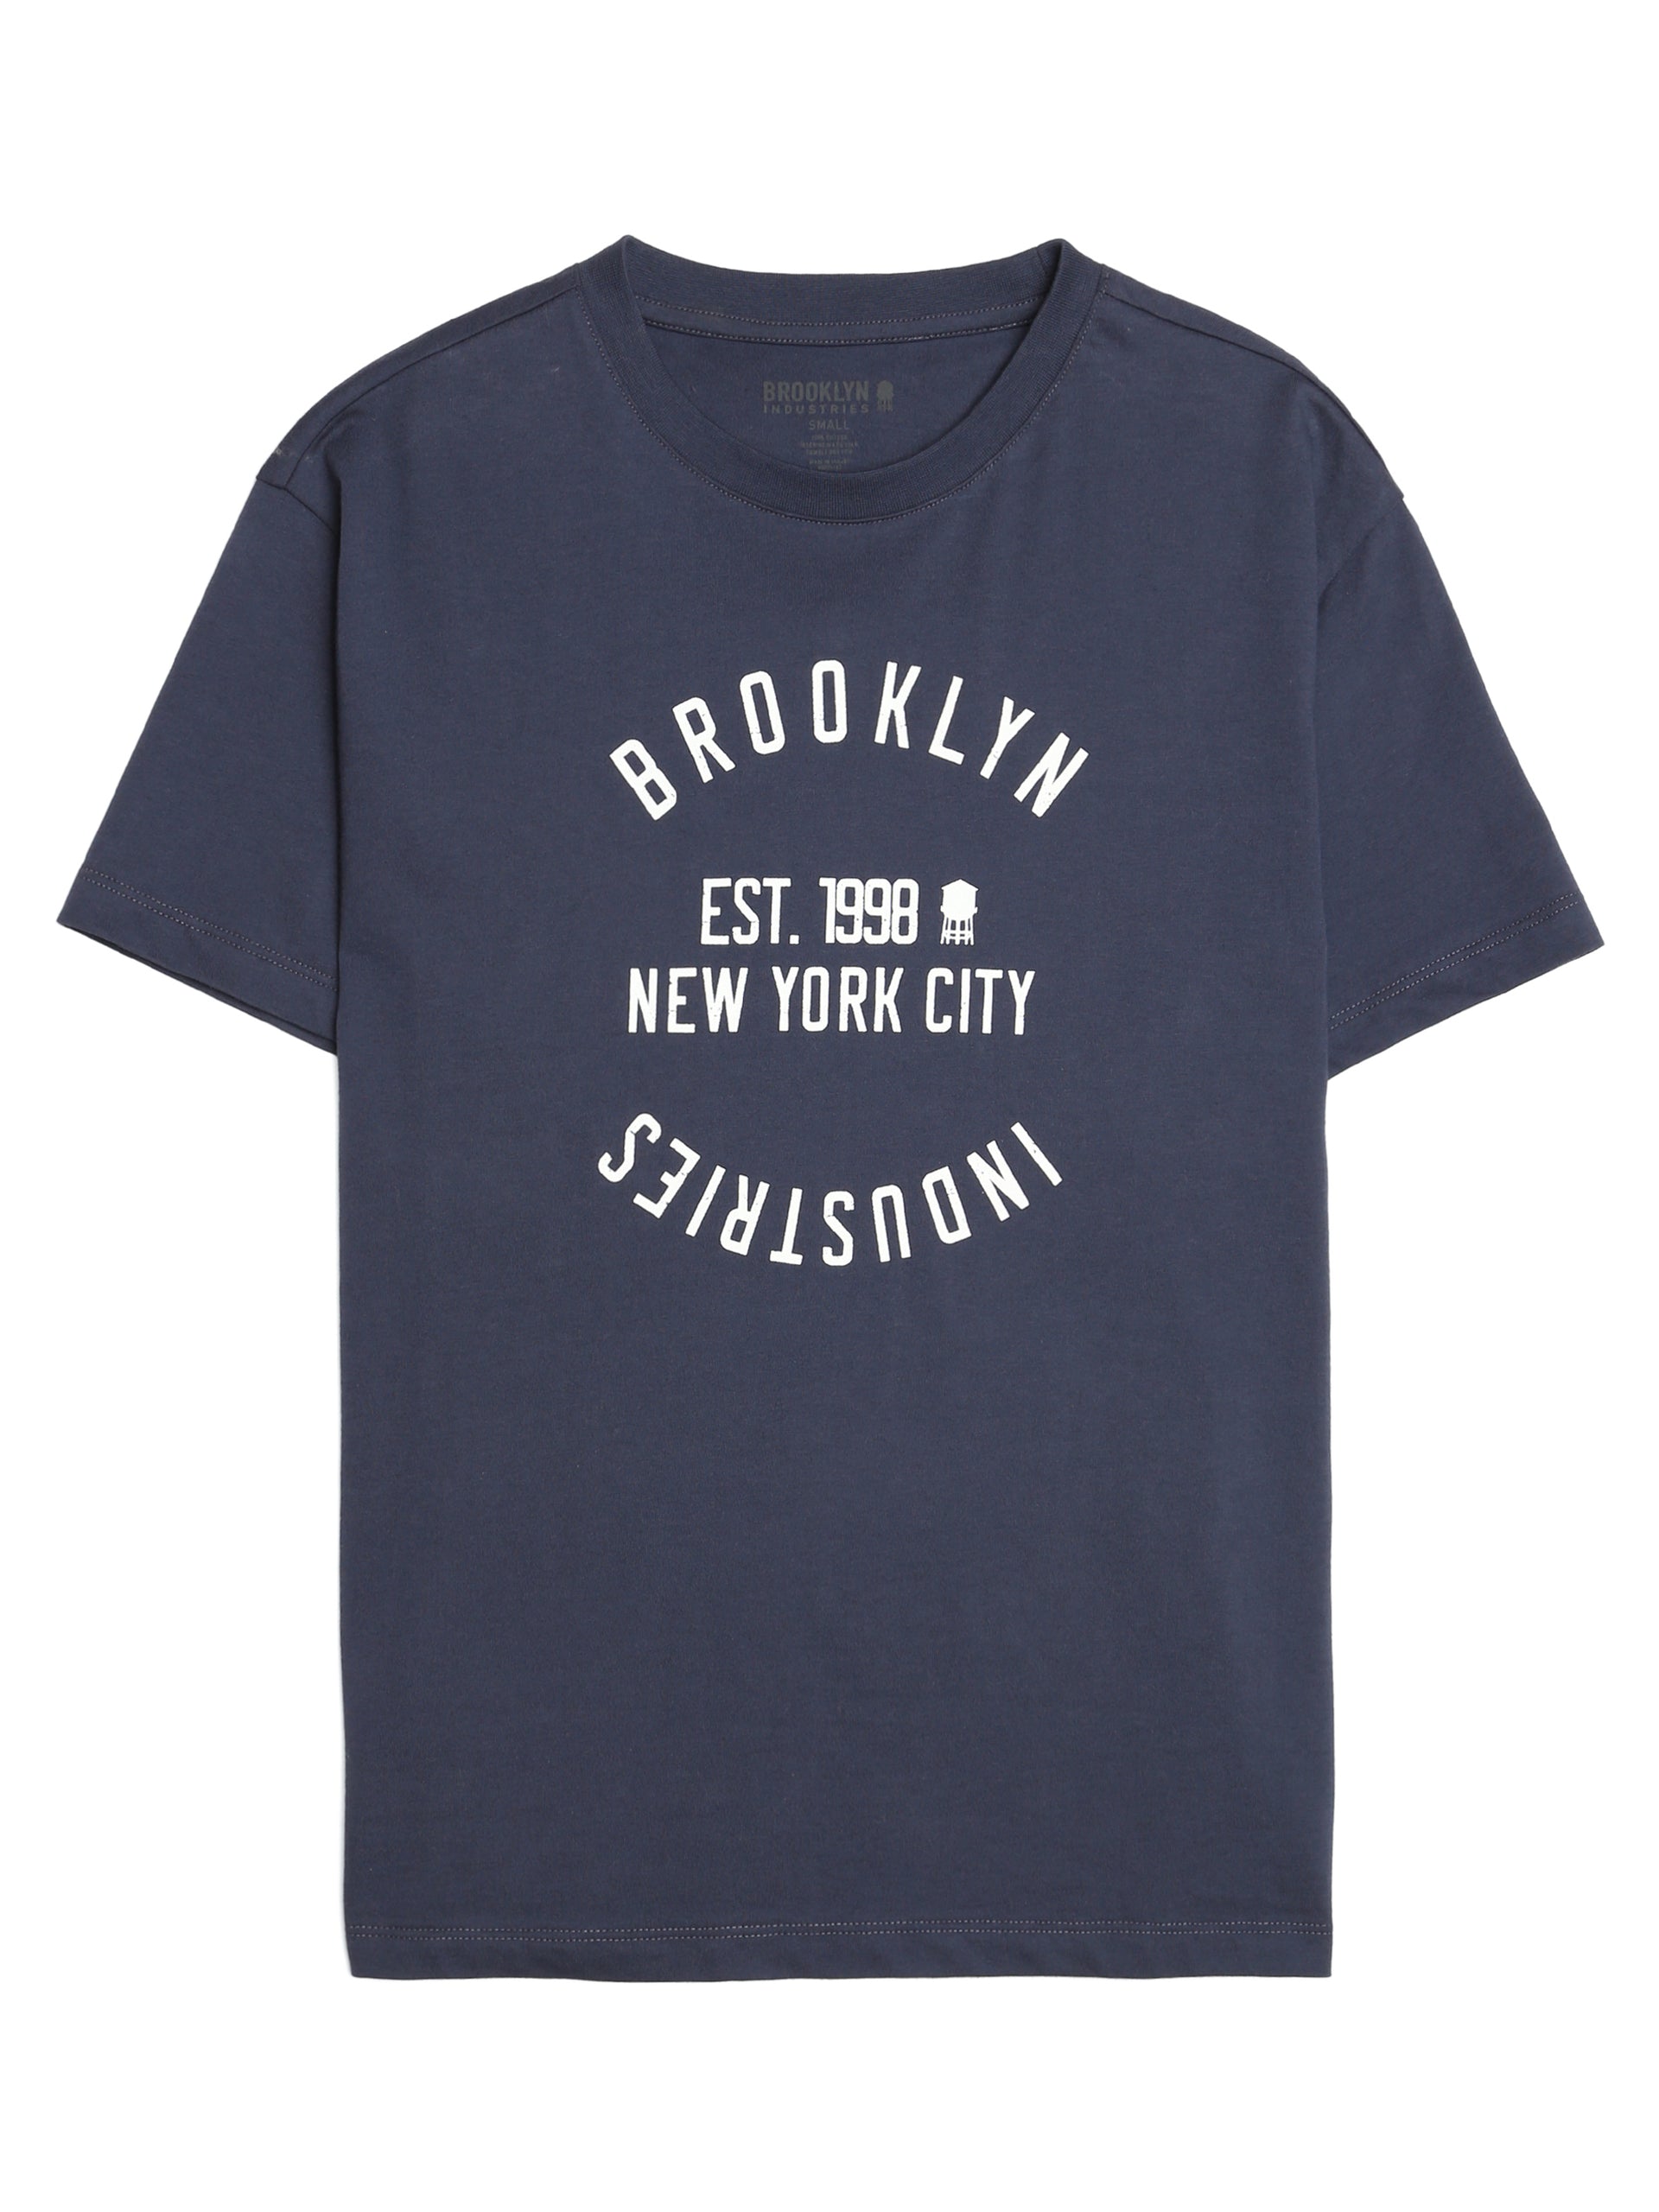 Brooklyn Women's Sweatshirts, Hoodies & Zip-Ups – Brooklyn Industries